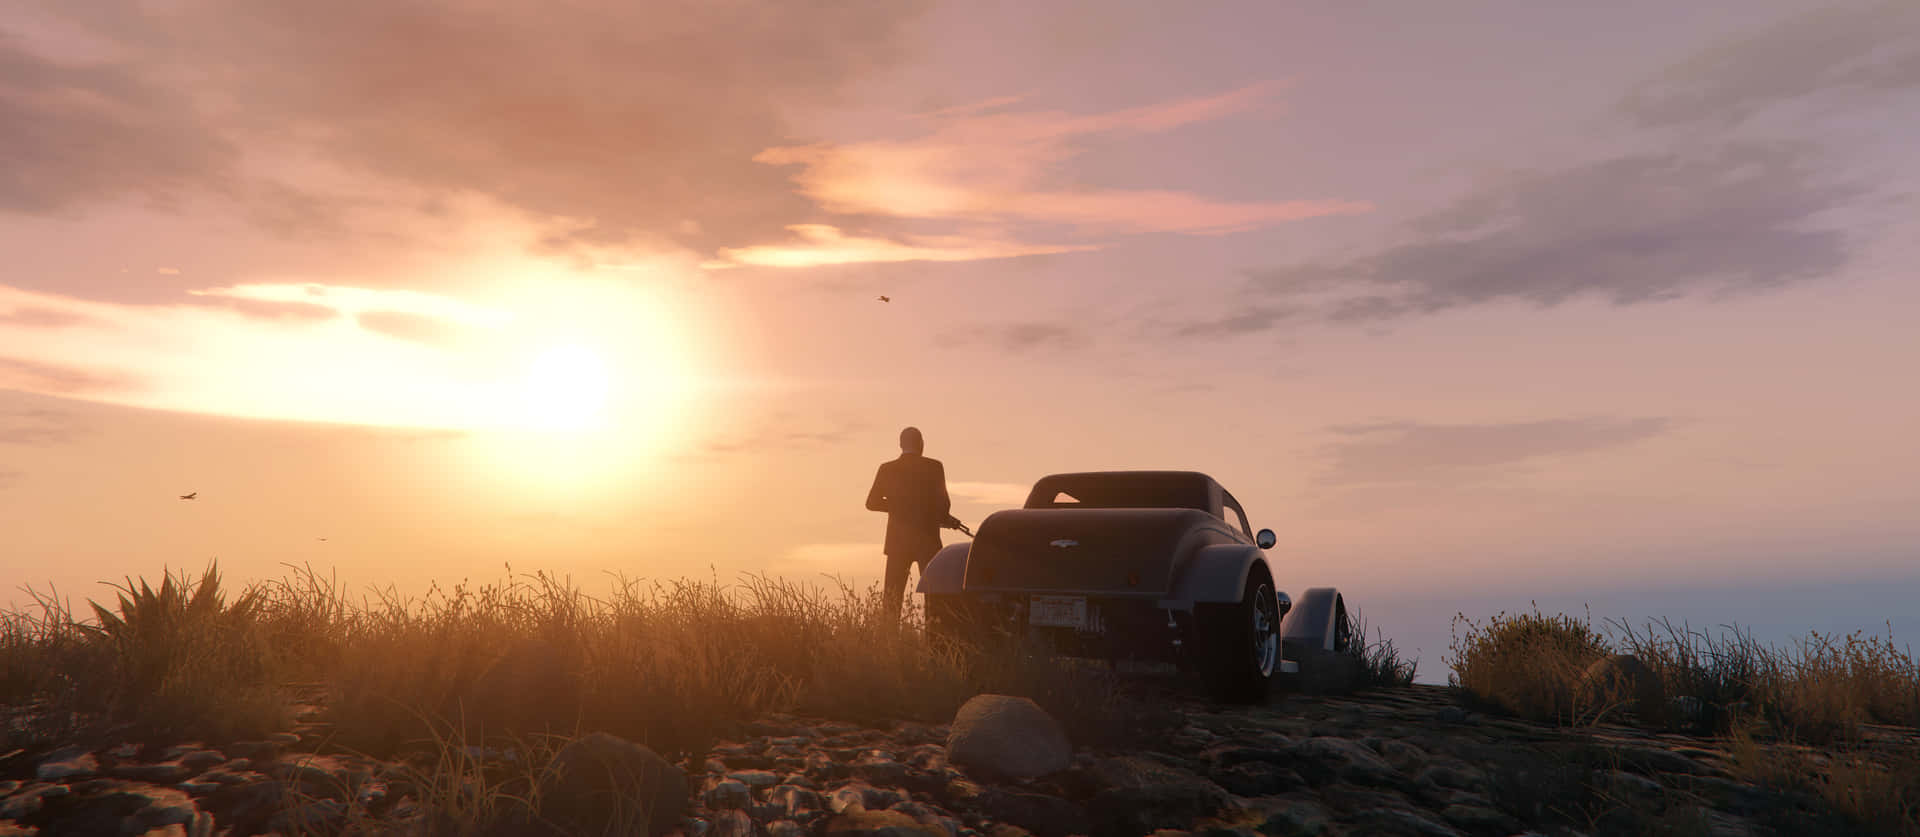 Grand Theft Auto V: "Go anywhere, do anything"